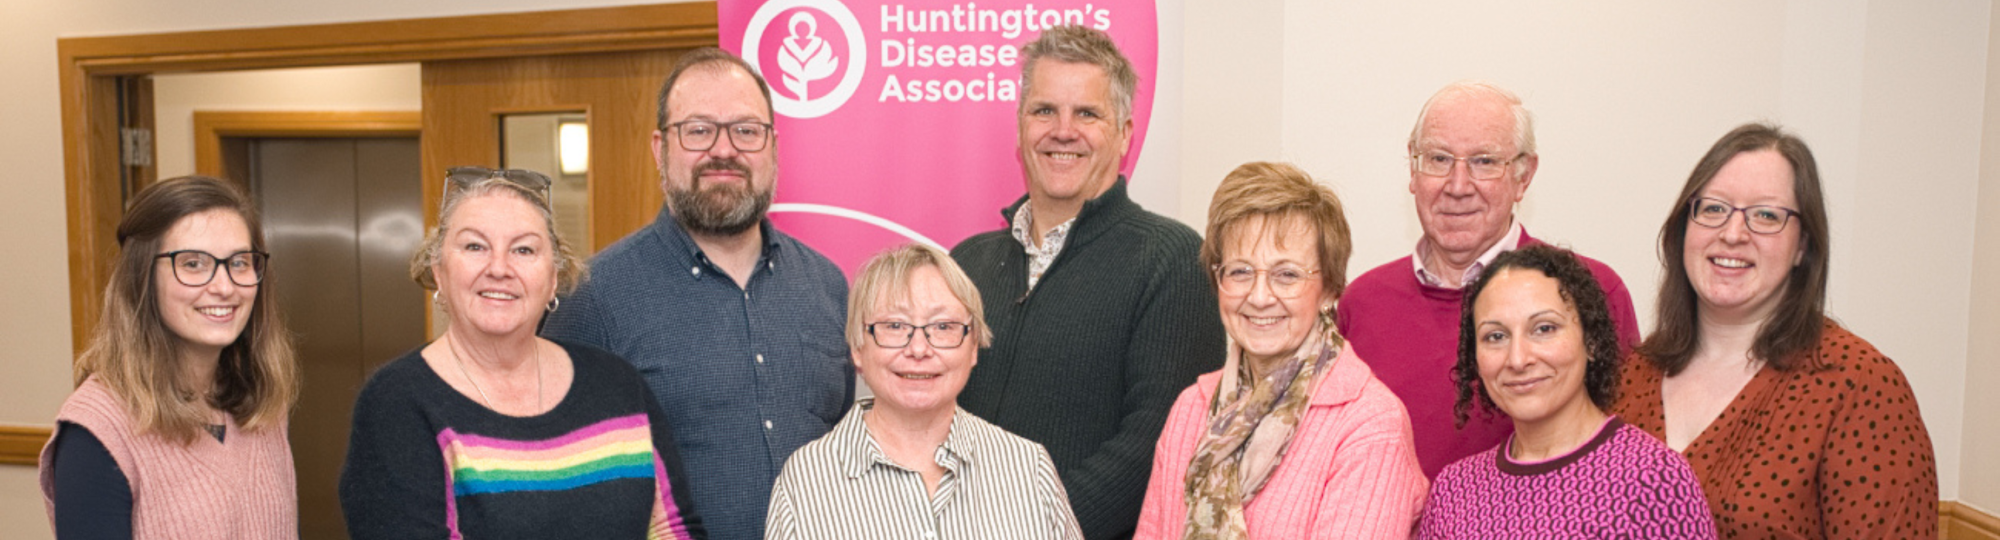 Huntington's disease trustees